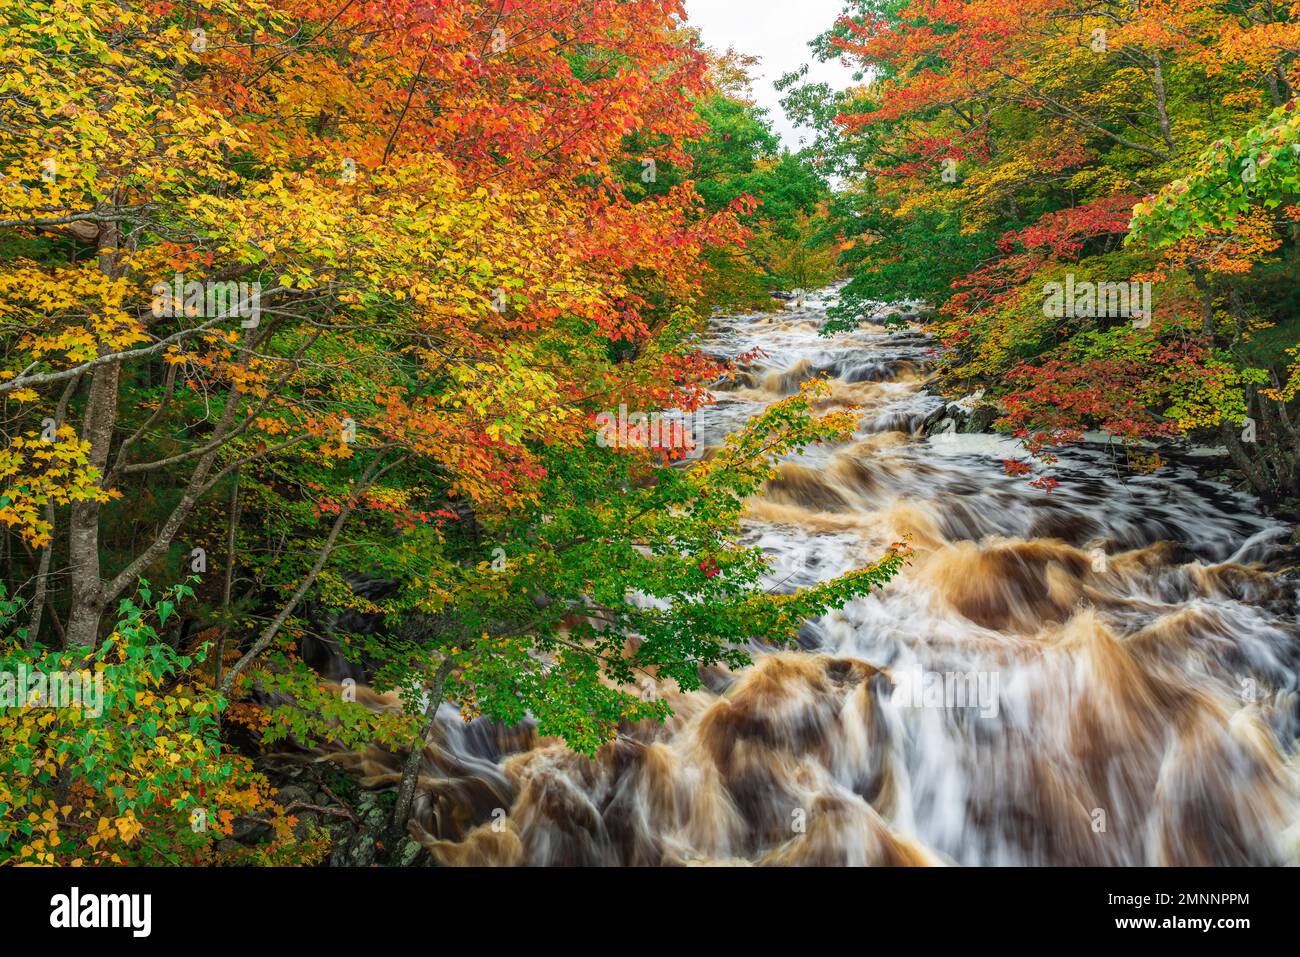 The Sable River with fall foliage color, Nova Scotia, Canada. Stock Photo